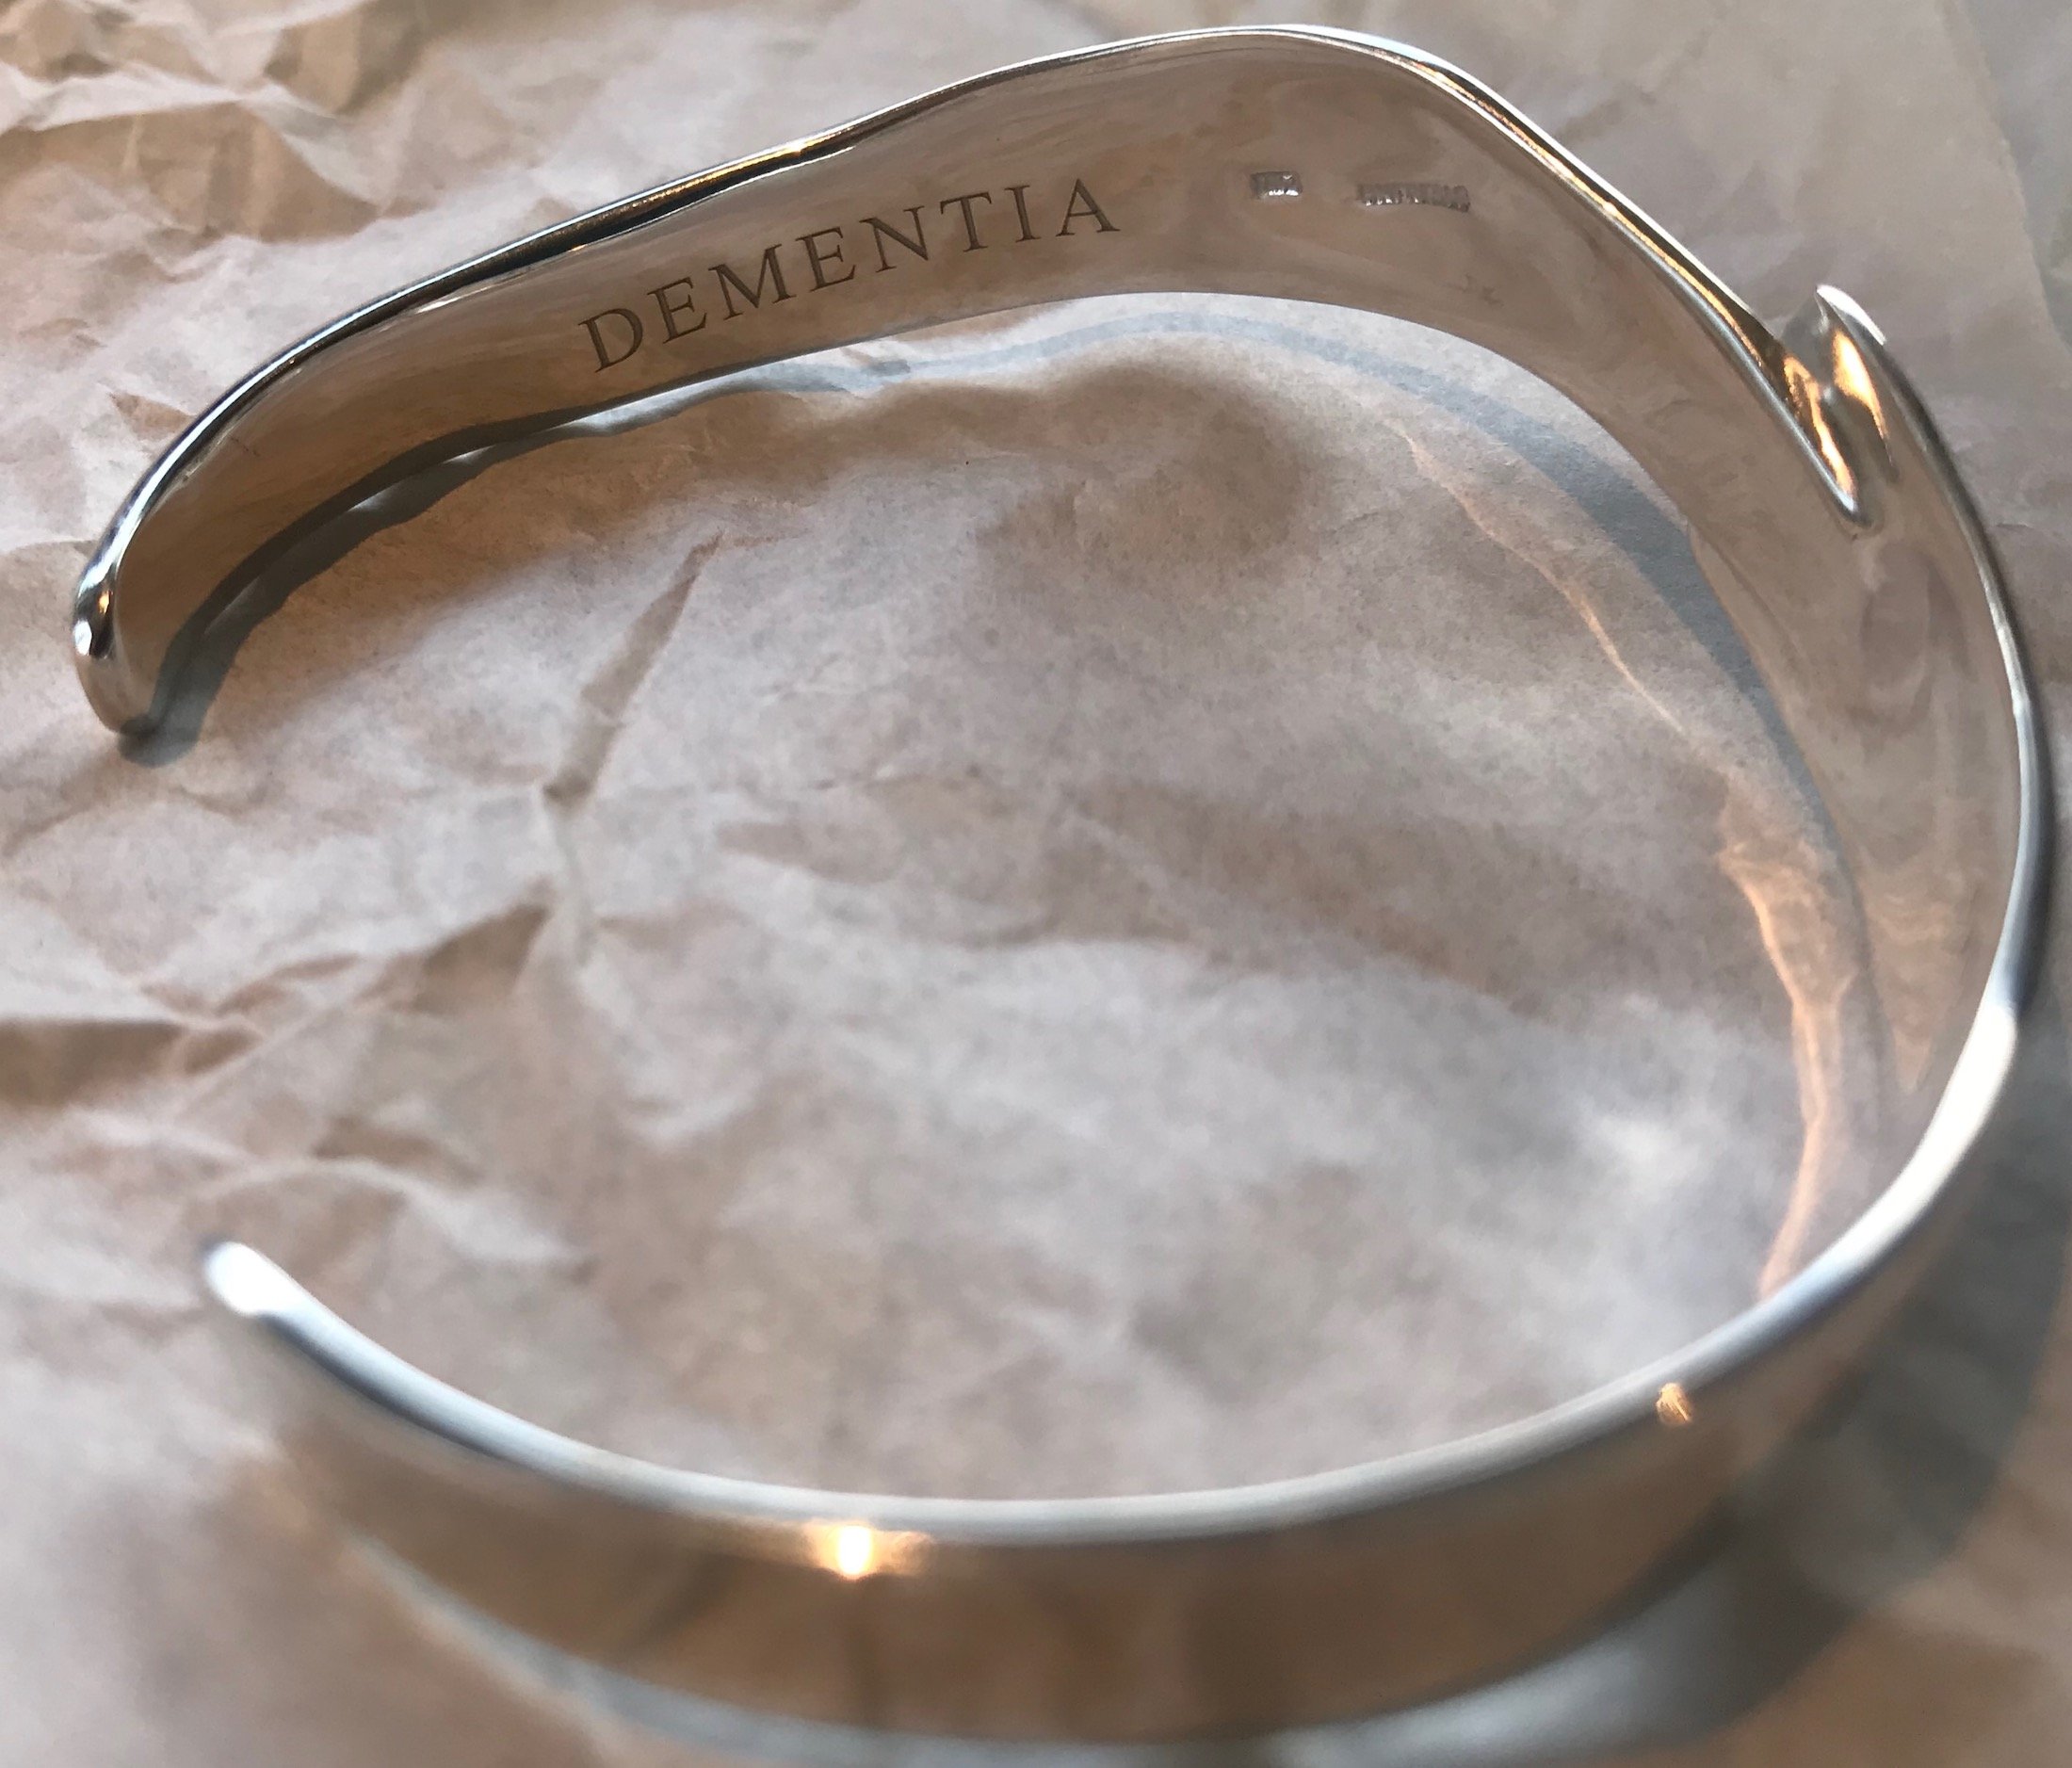 WristAssured  Identity Bracelet for Dementia or Alzheimers Who Wander